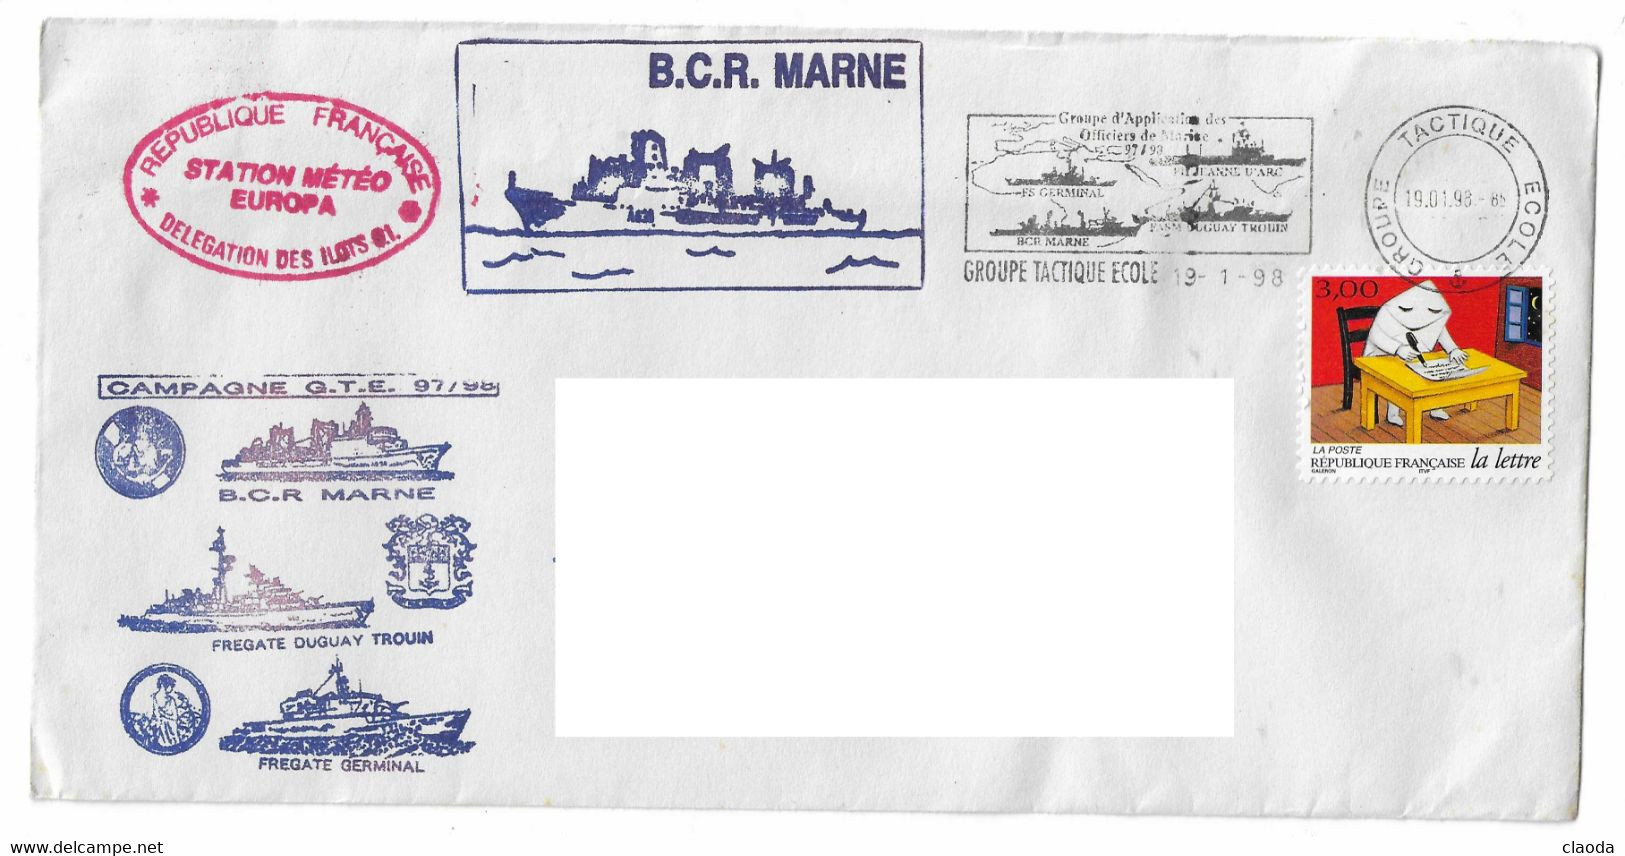 18094 - CAMPAGNE JEANNE D'ARC - GTE 97 - 98 (MARNE - DGT - GERMINAL) STATION METEO EUROPA - Janvier 1998 - Poste Navale